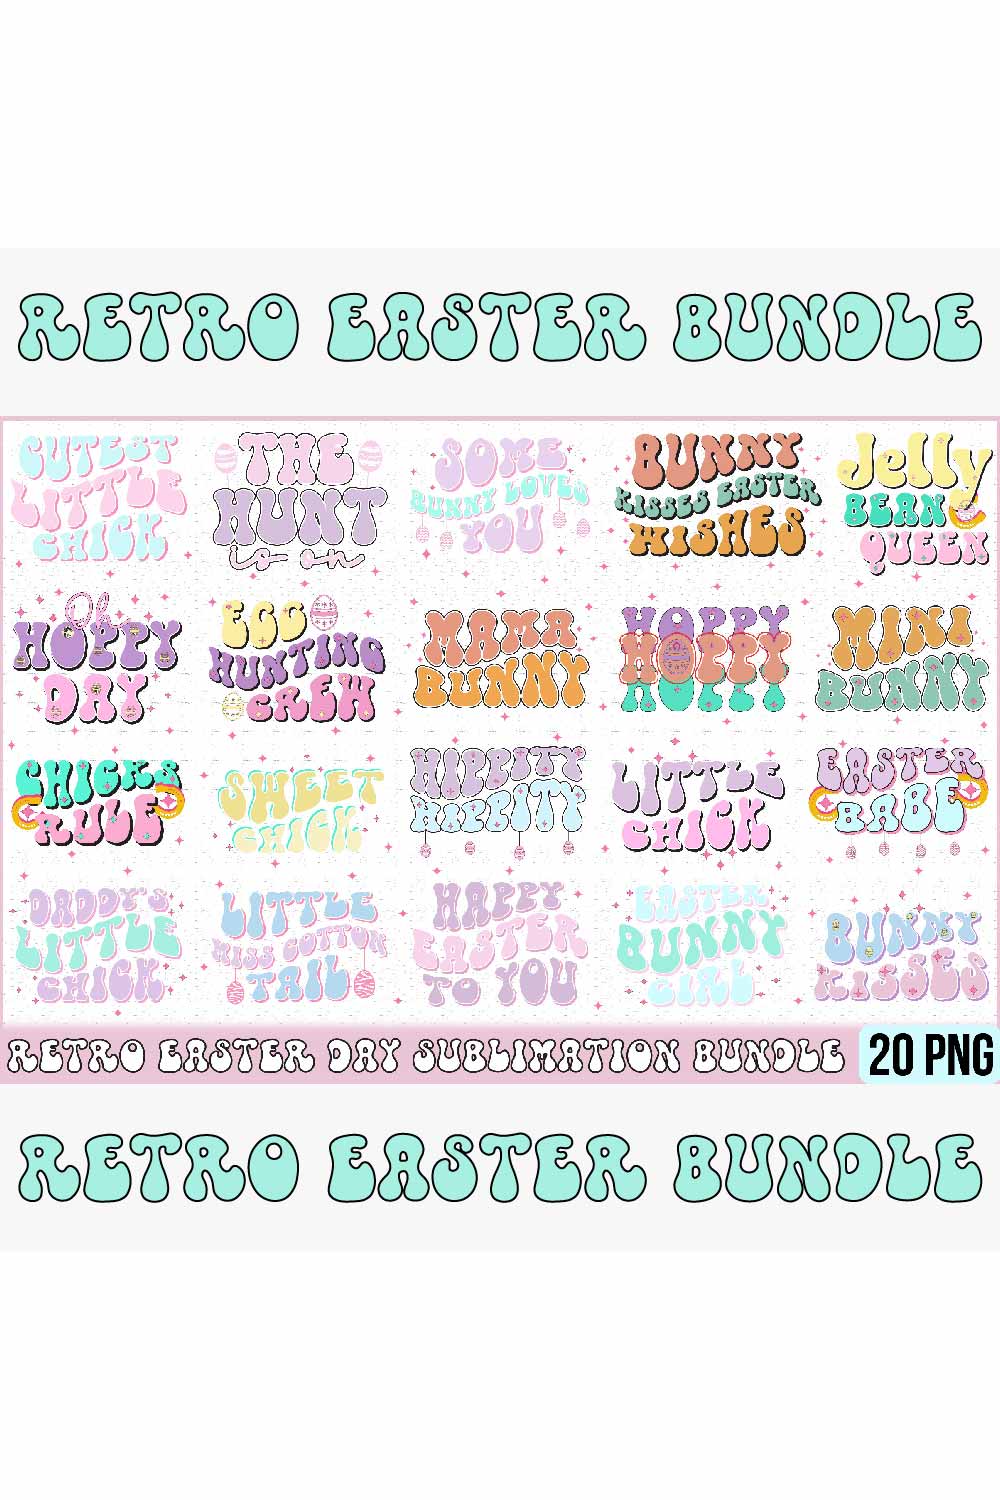 Retro Easter Day Sublimation Bundle pinterest preview image.